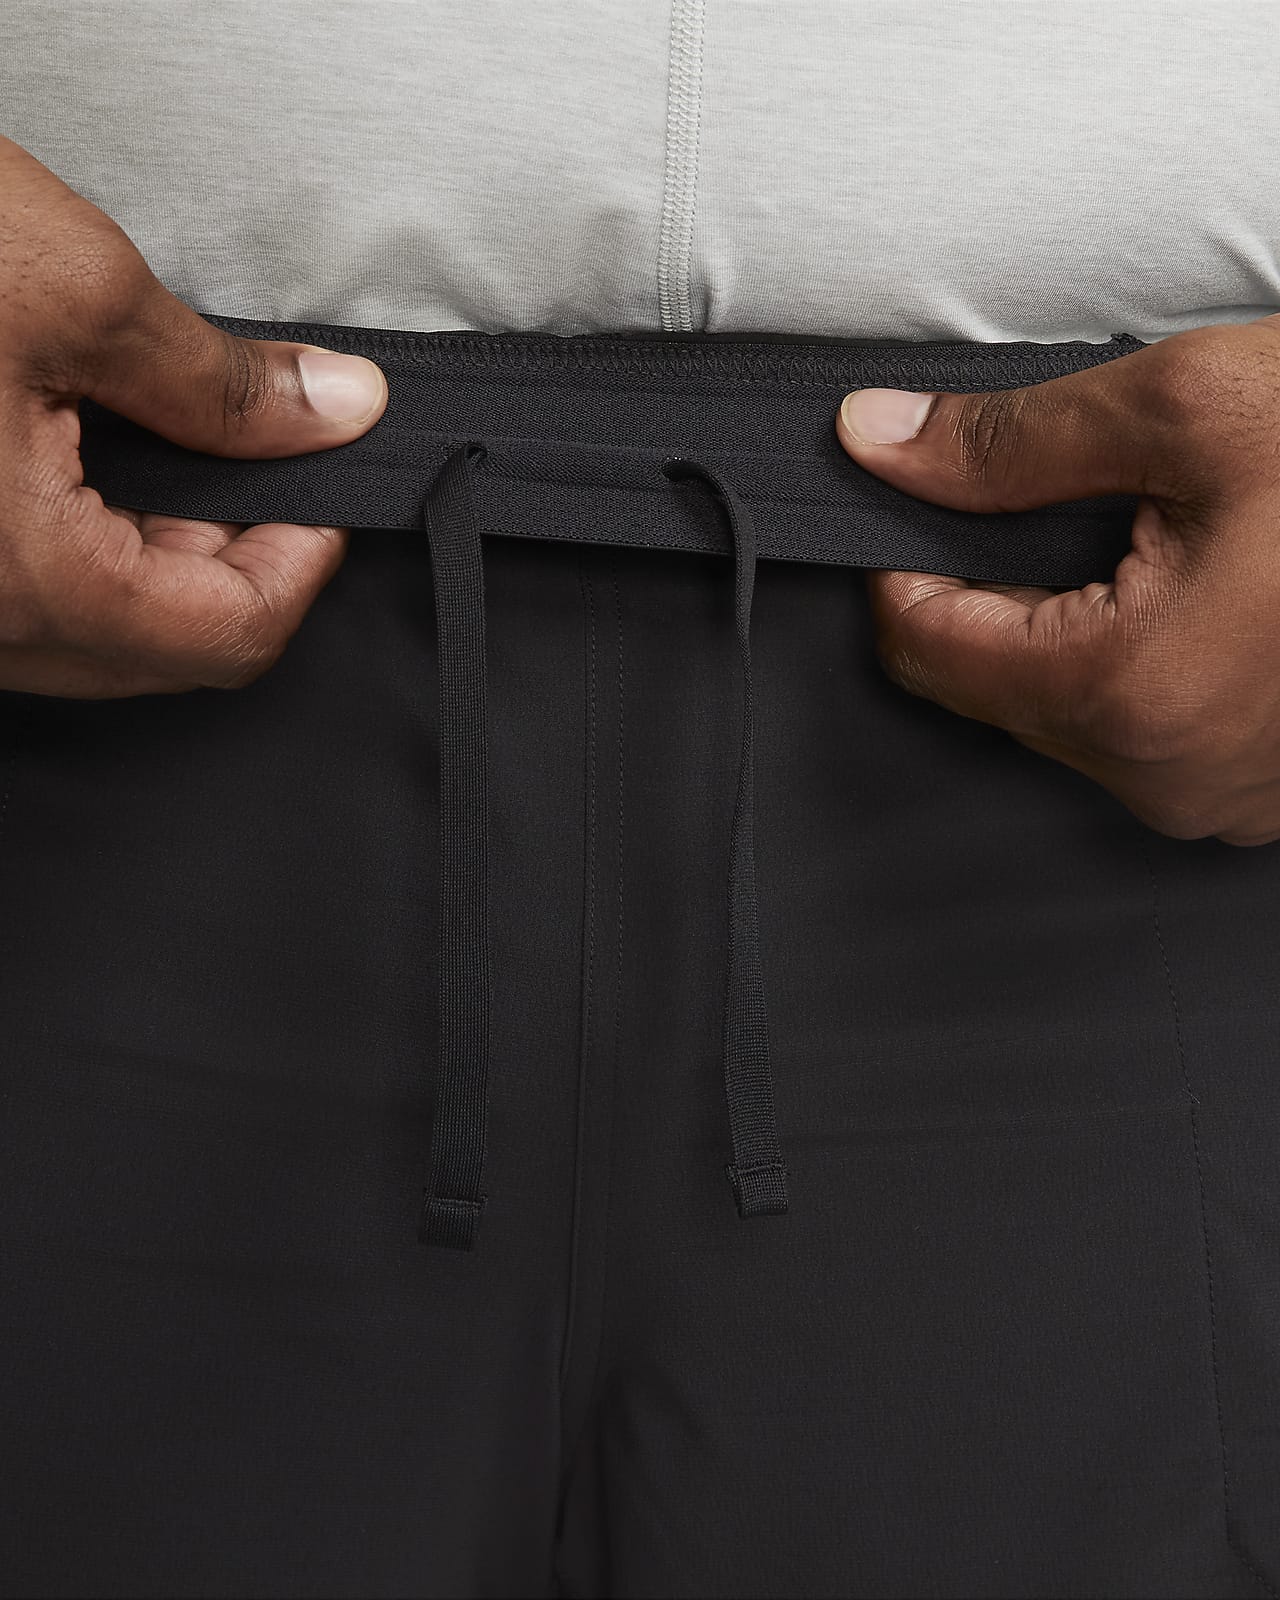 nike men's shorts zipper pockets